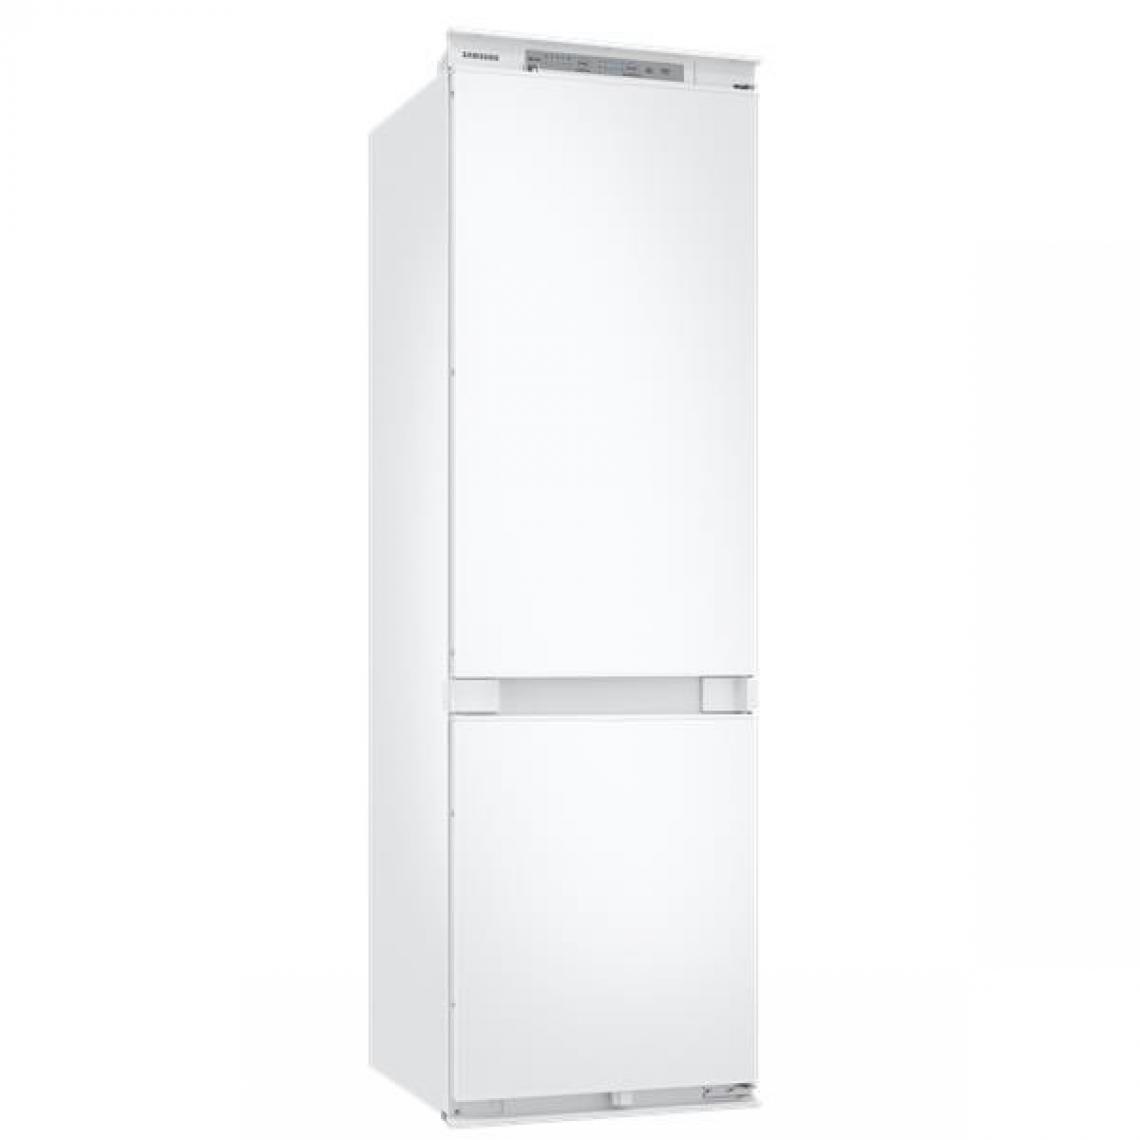 Samsung - samsung - brb26600eww - Réfrigérateur